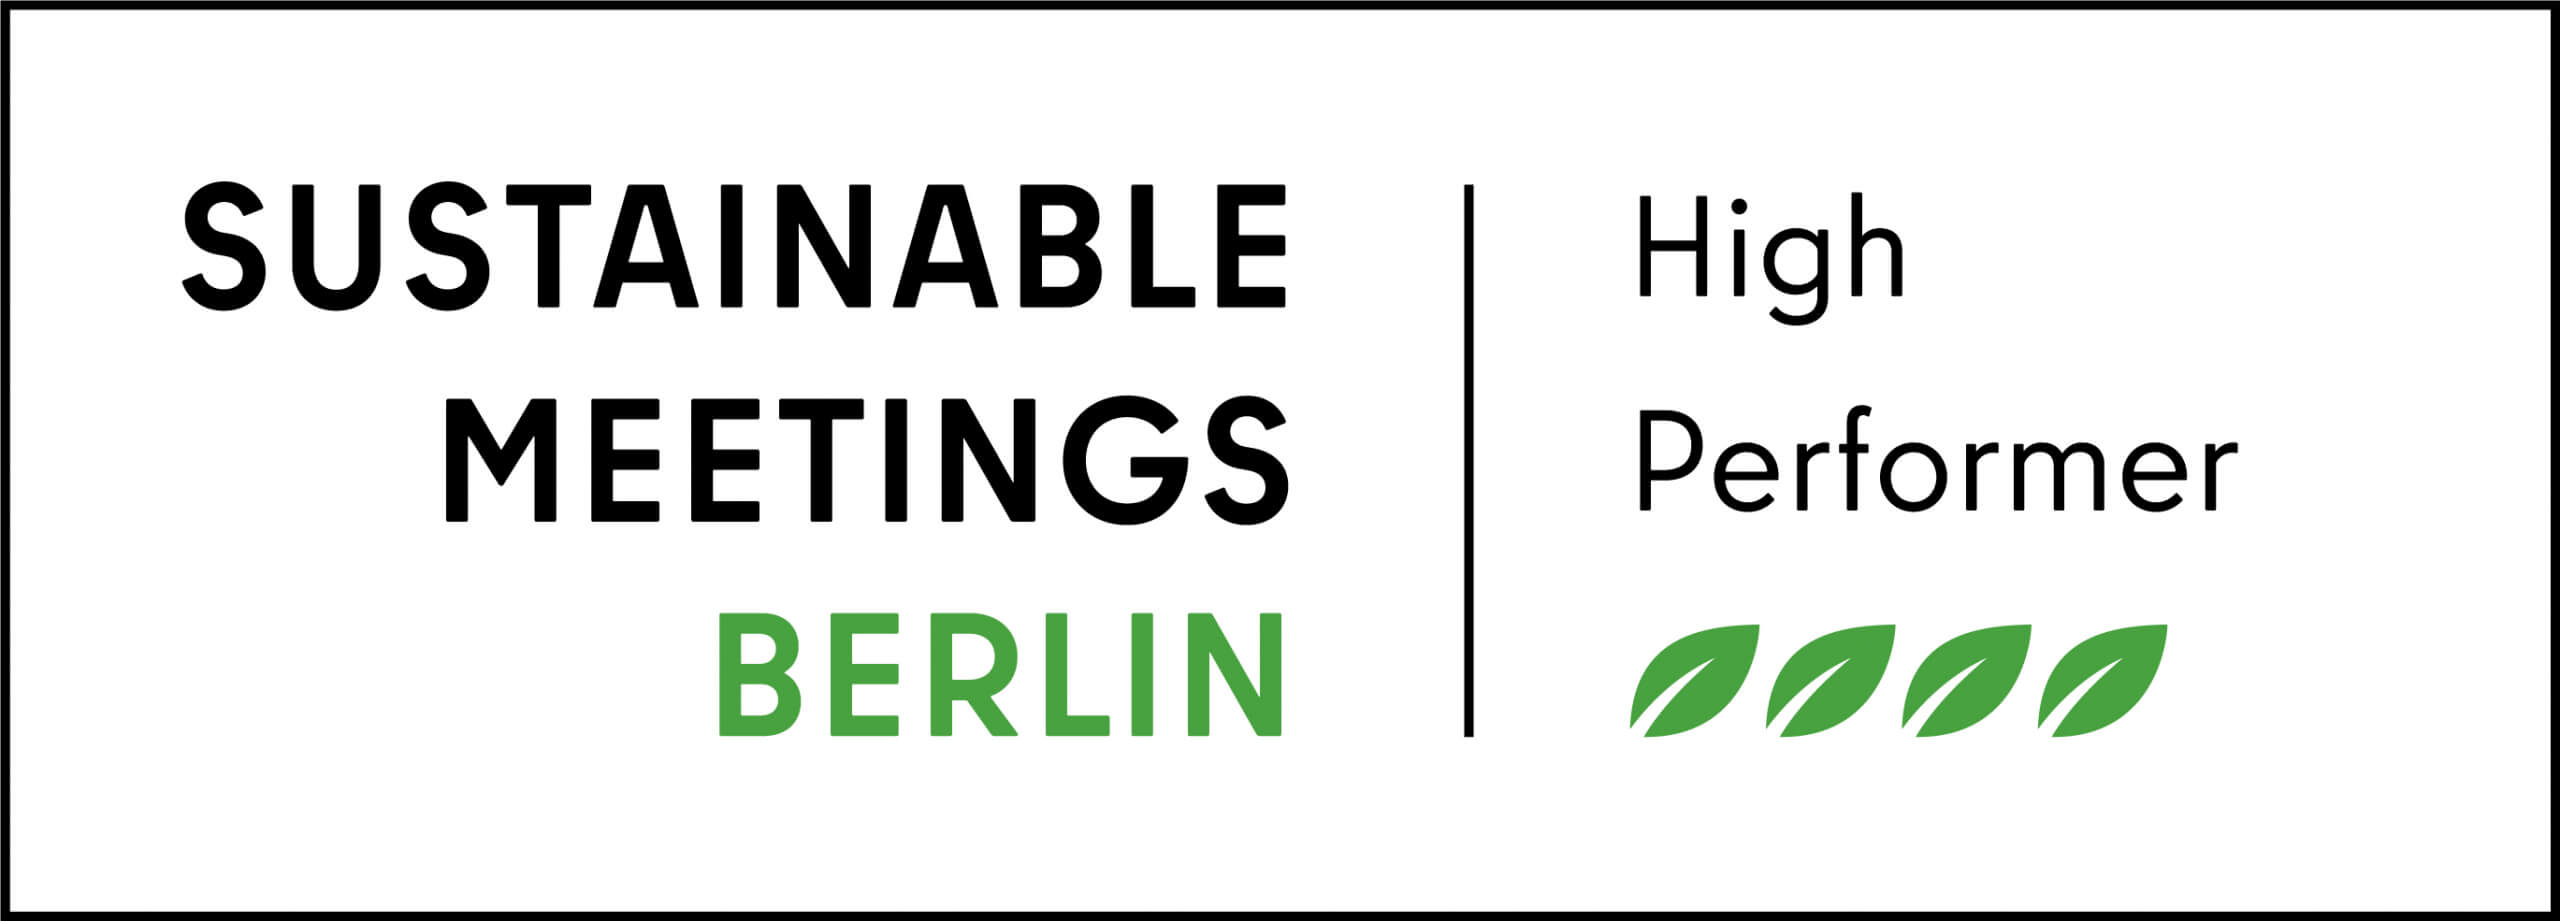 Partner Logo High Performer Sustainable Meetings